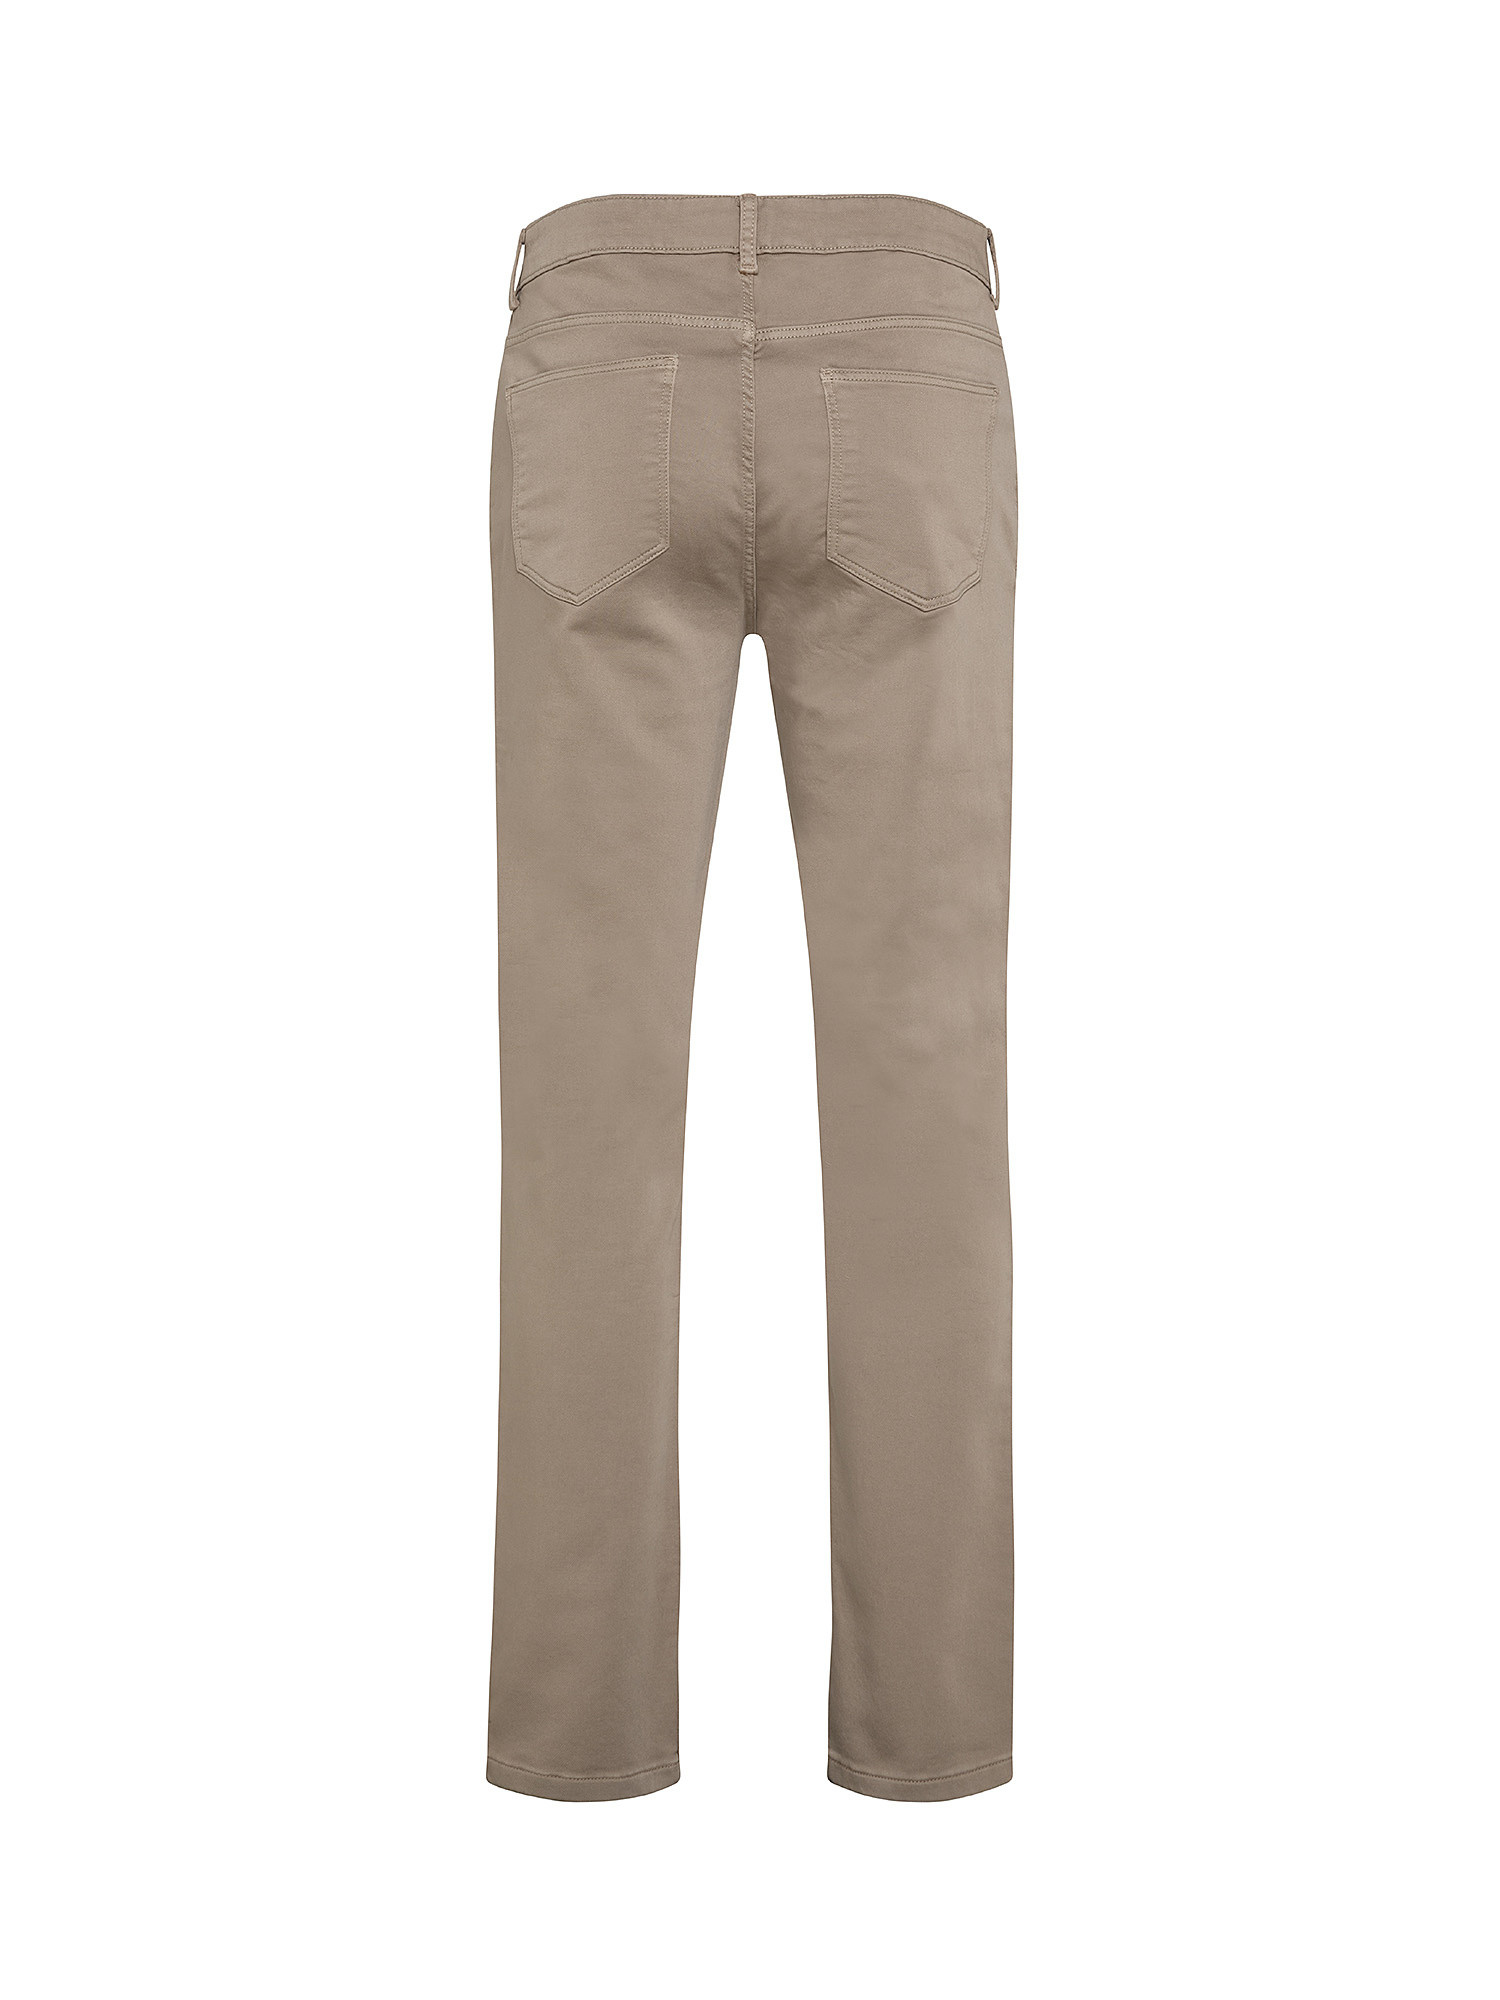 Pantalone 5 tasche slim in felpa, Beige, large